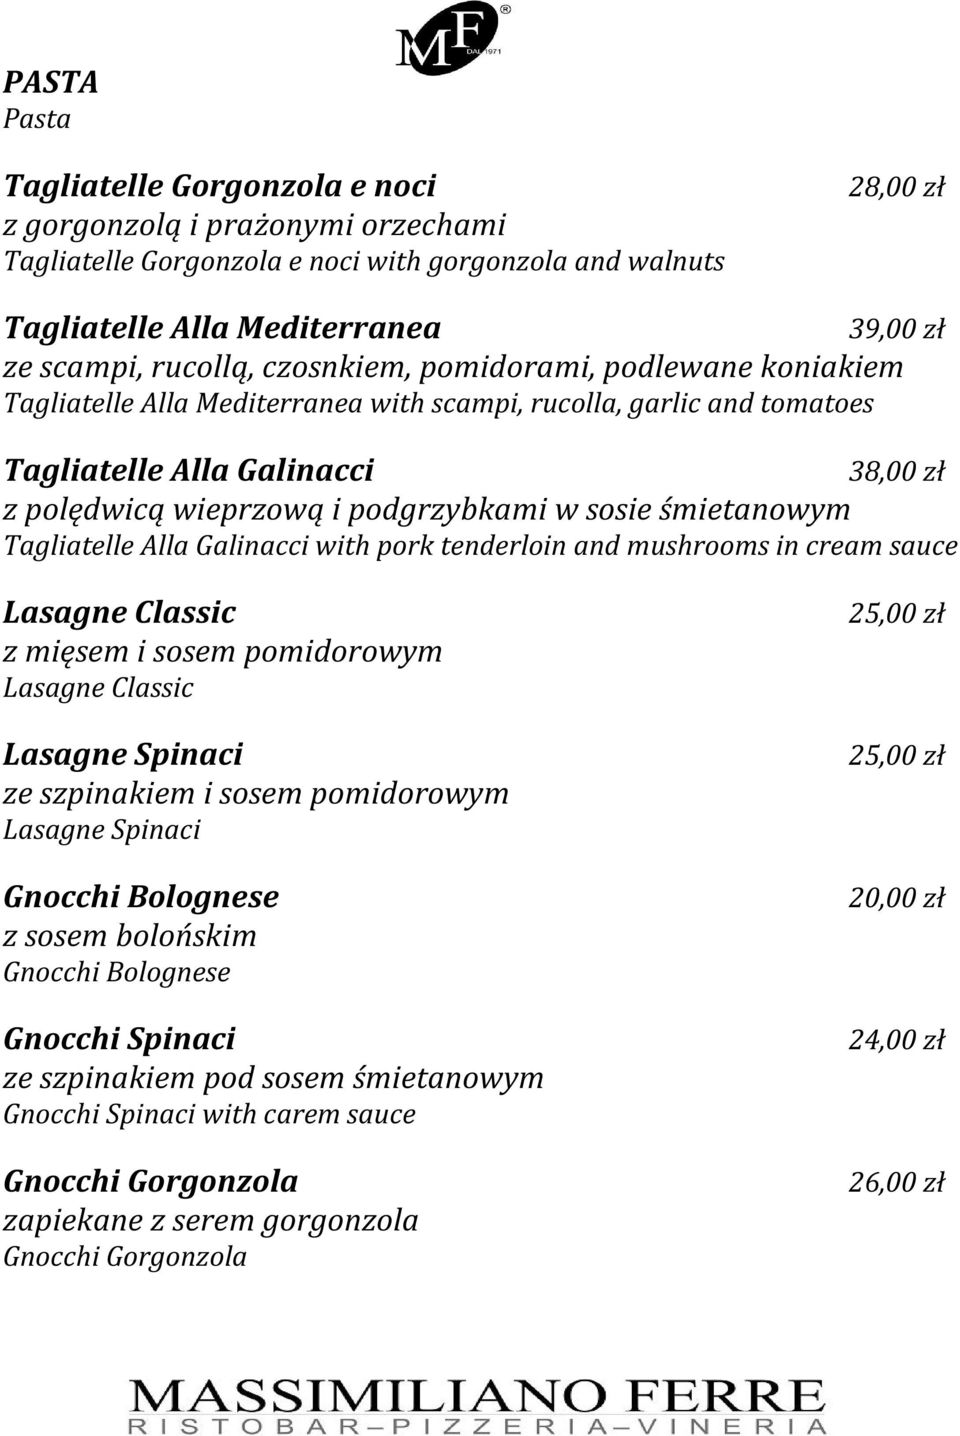 sosie śmietanowym Tagliatelle Alla Galinacci with pork tenderloin and mushrooms in cream sauce Lasagne Classic z mięsem i sosem pomidorowym Lasagne Classic Lasagne Spinaci ze szpinakiem i sosem